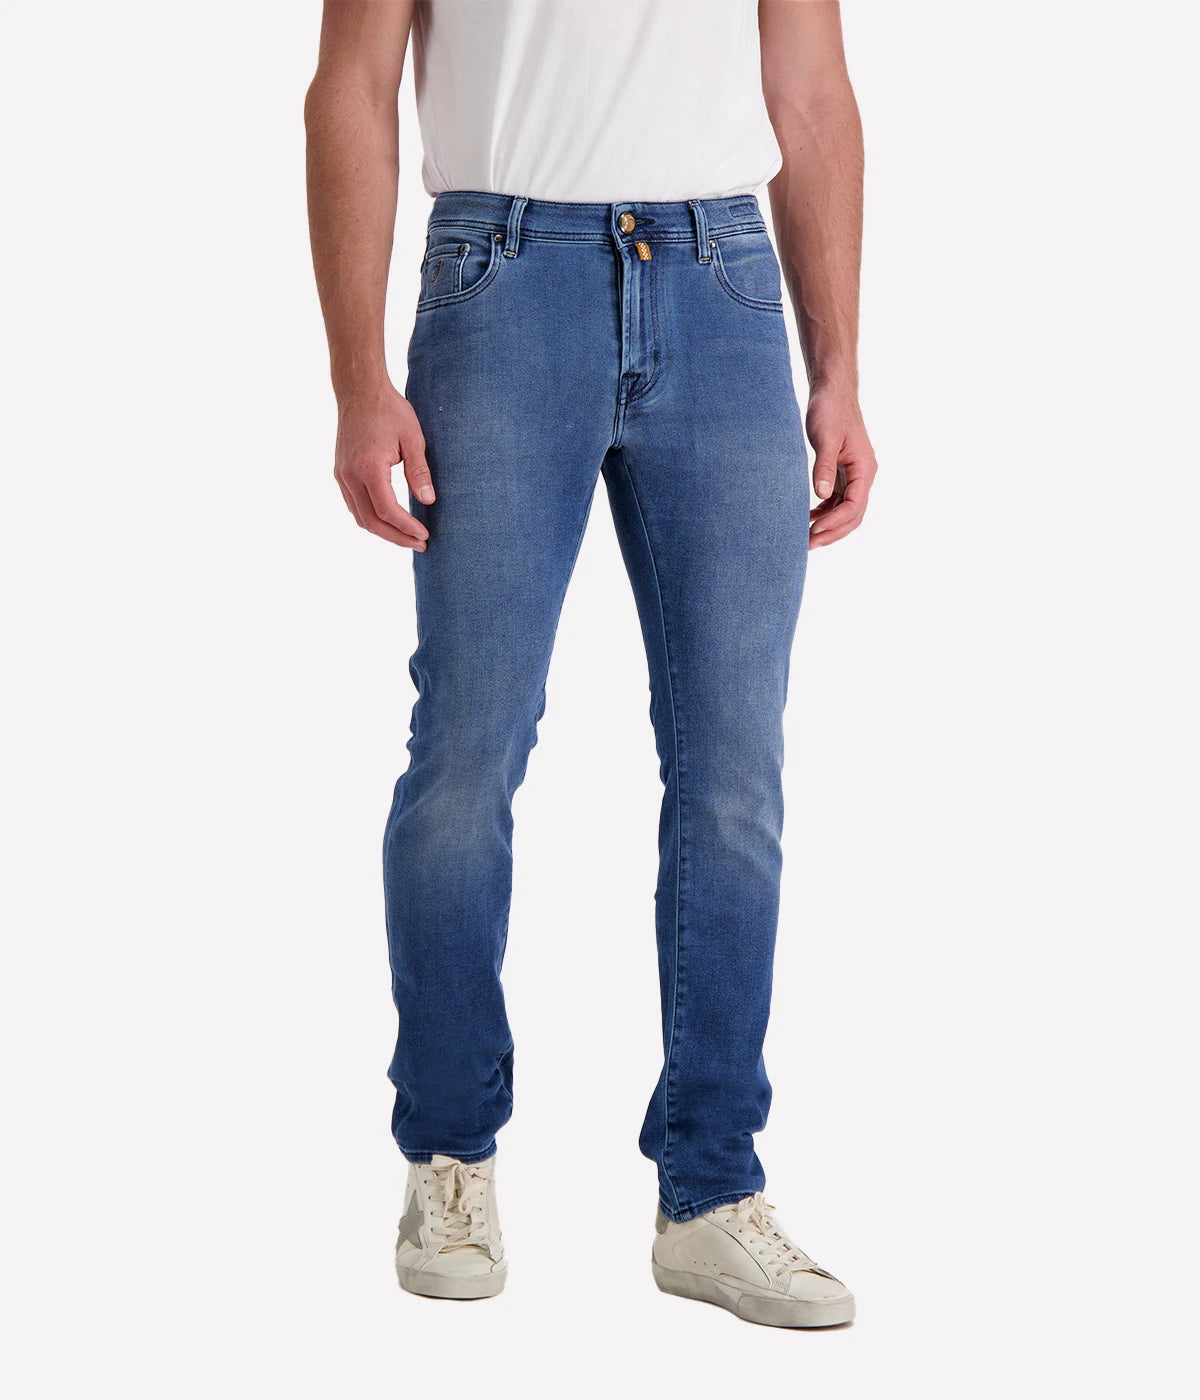 Bard 5 Pocket Slim Fit Jean in Dark Blue Tan